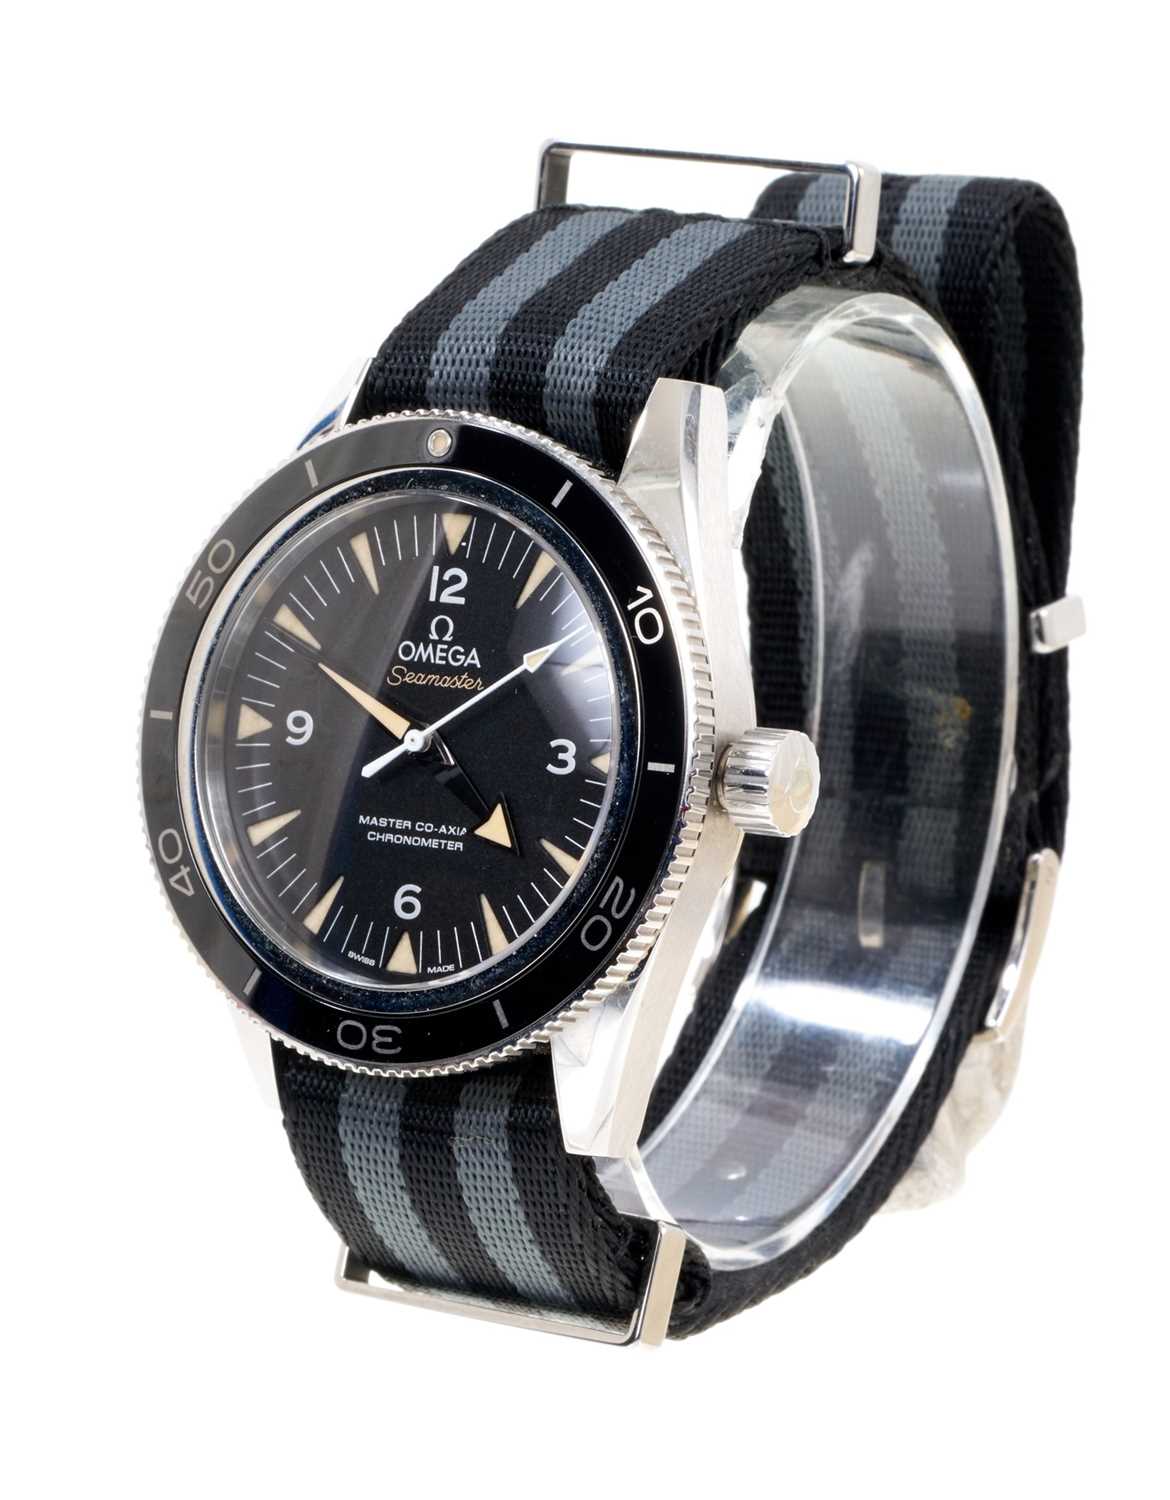 Fine Gentlemen’s modern Omega Seamaster wristwatch in box with certificate - Image 2 of 6